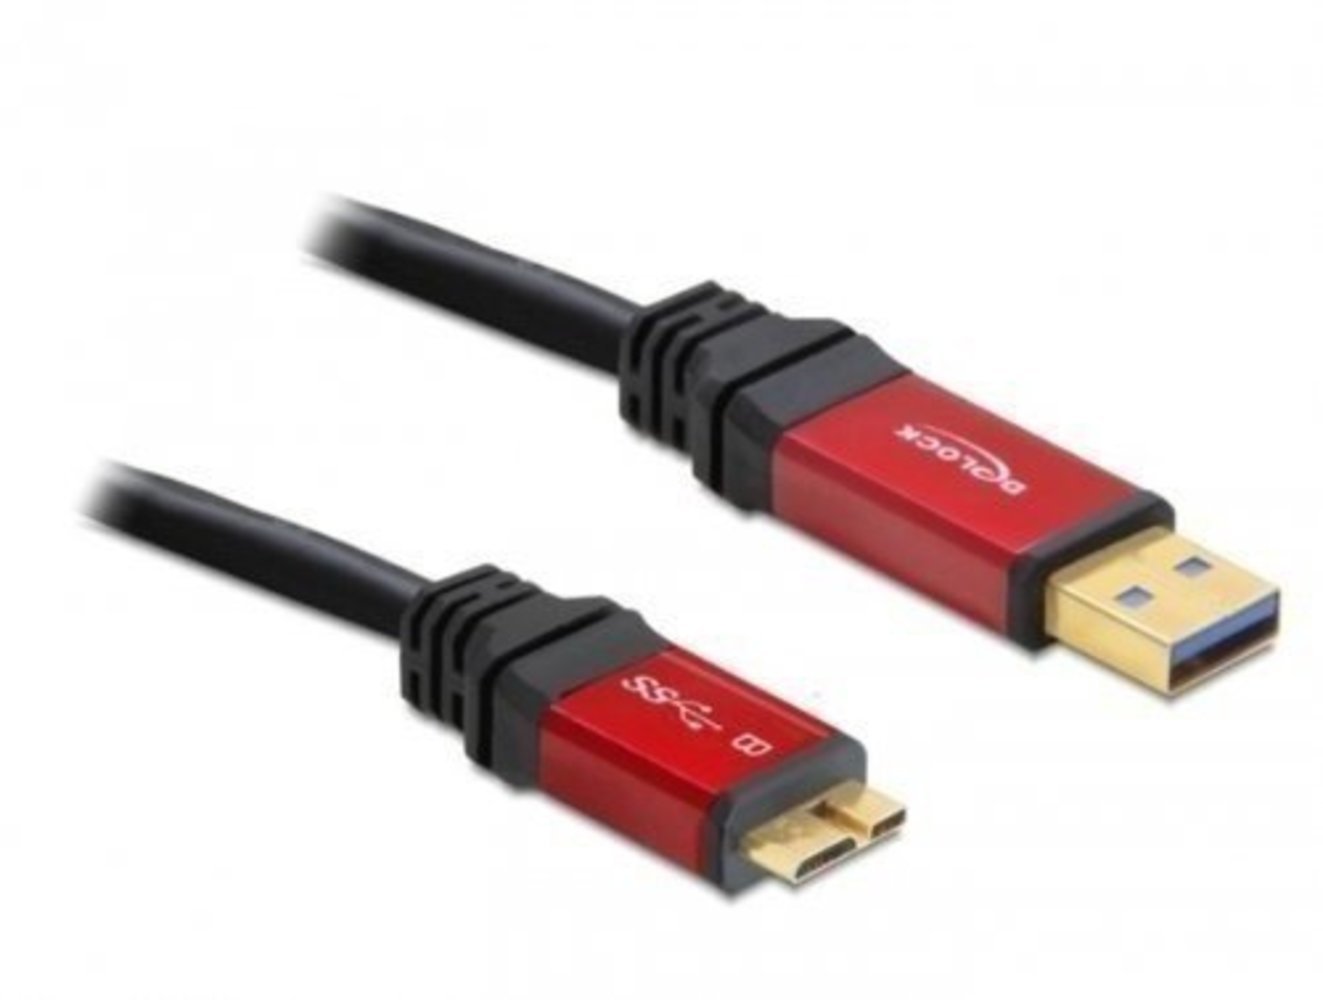 DELOCK Kabel USB 3.0 rot A > micro-B 3.0m – Hochwertiges und langlebiges USB-Kabel mit 3.0m Länge